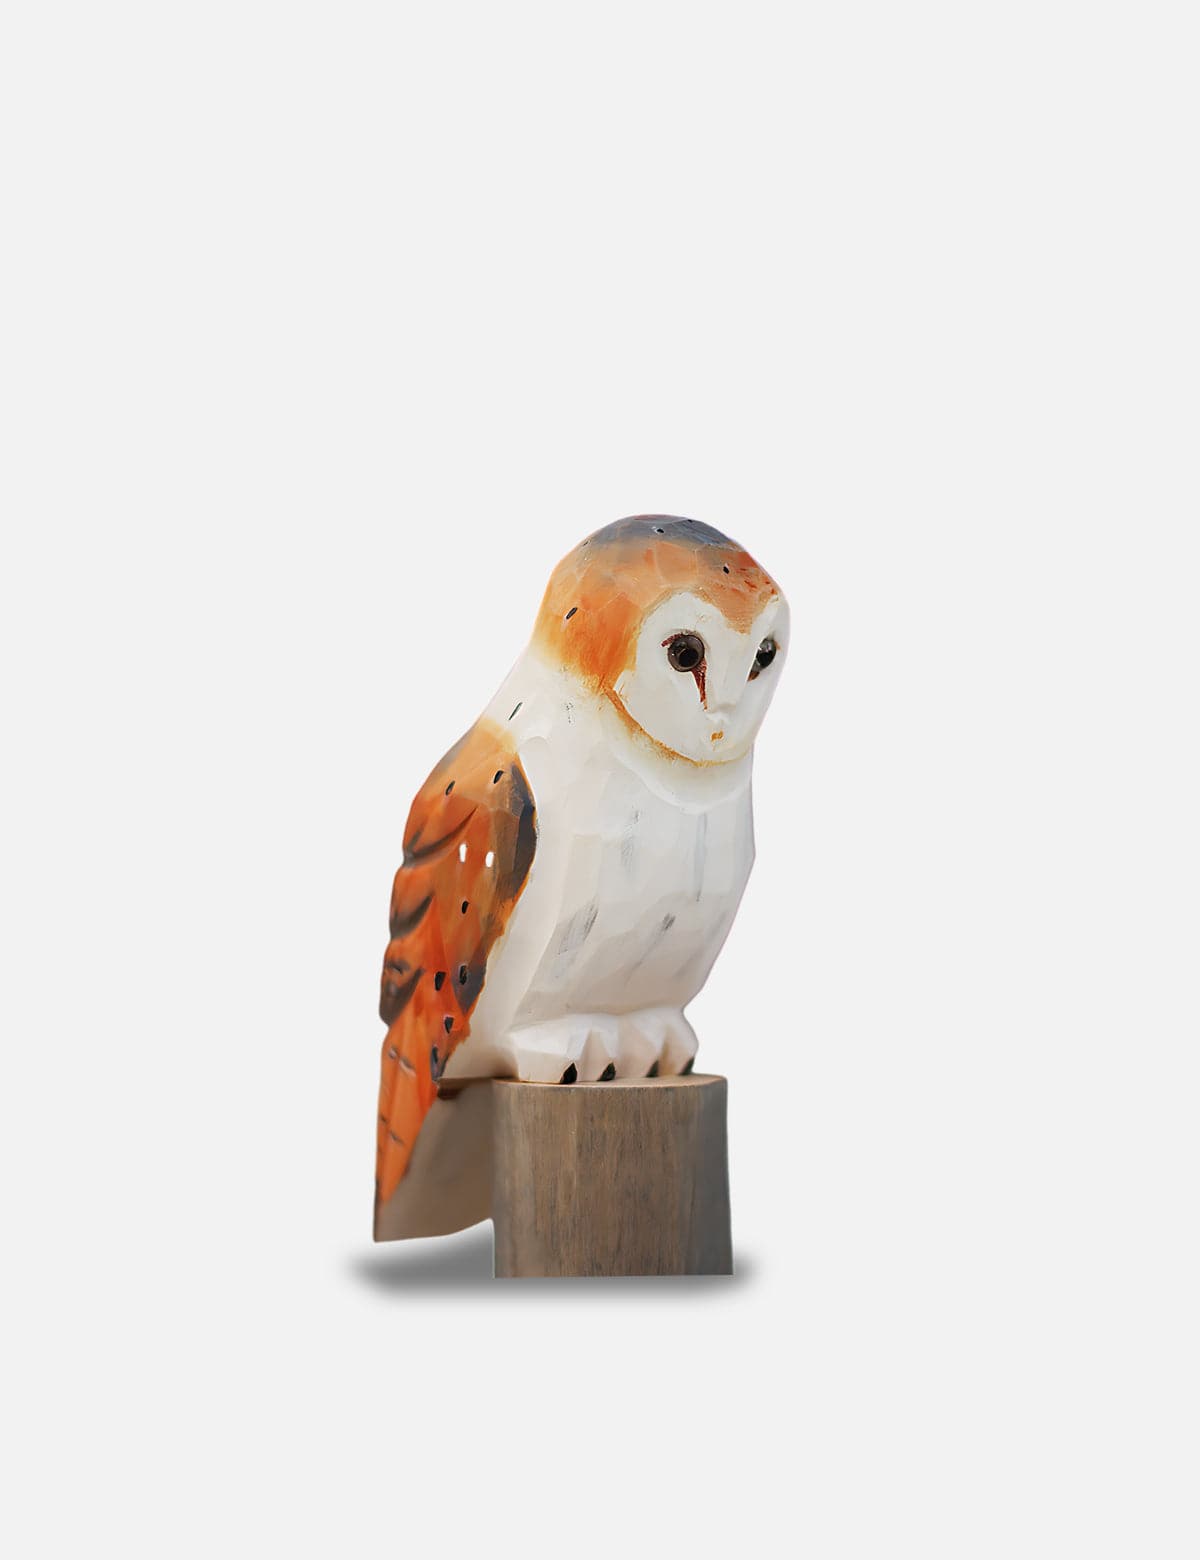 Whimsical Owl Wood Carving - Enchanting Desk Ornament